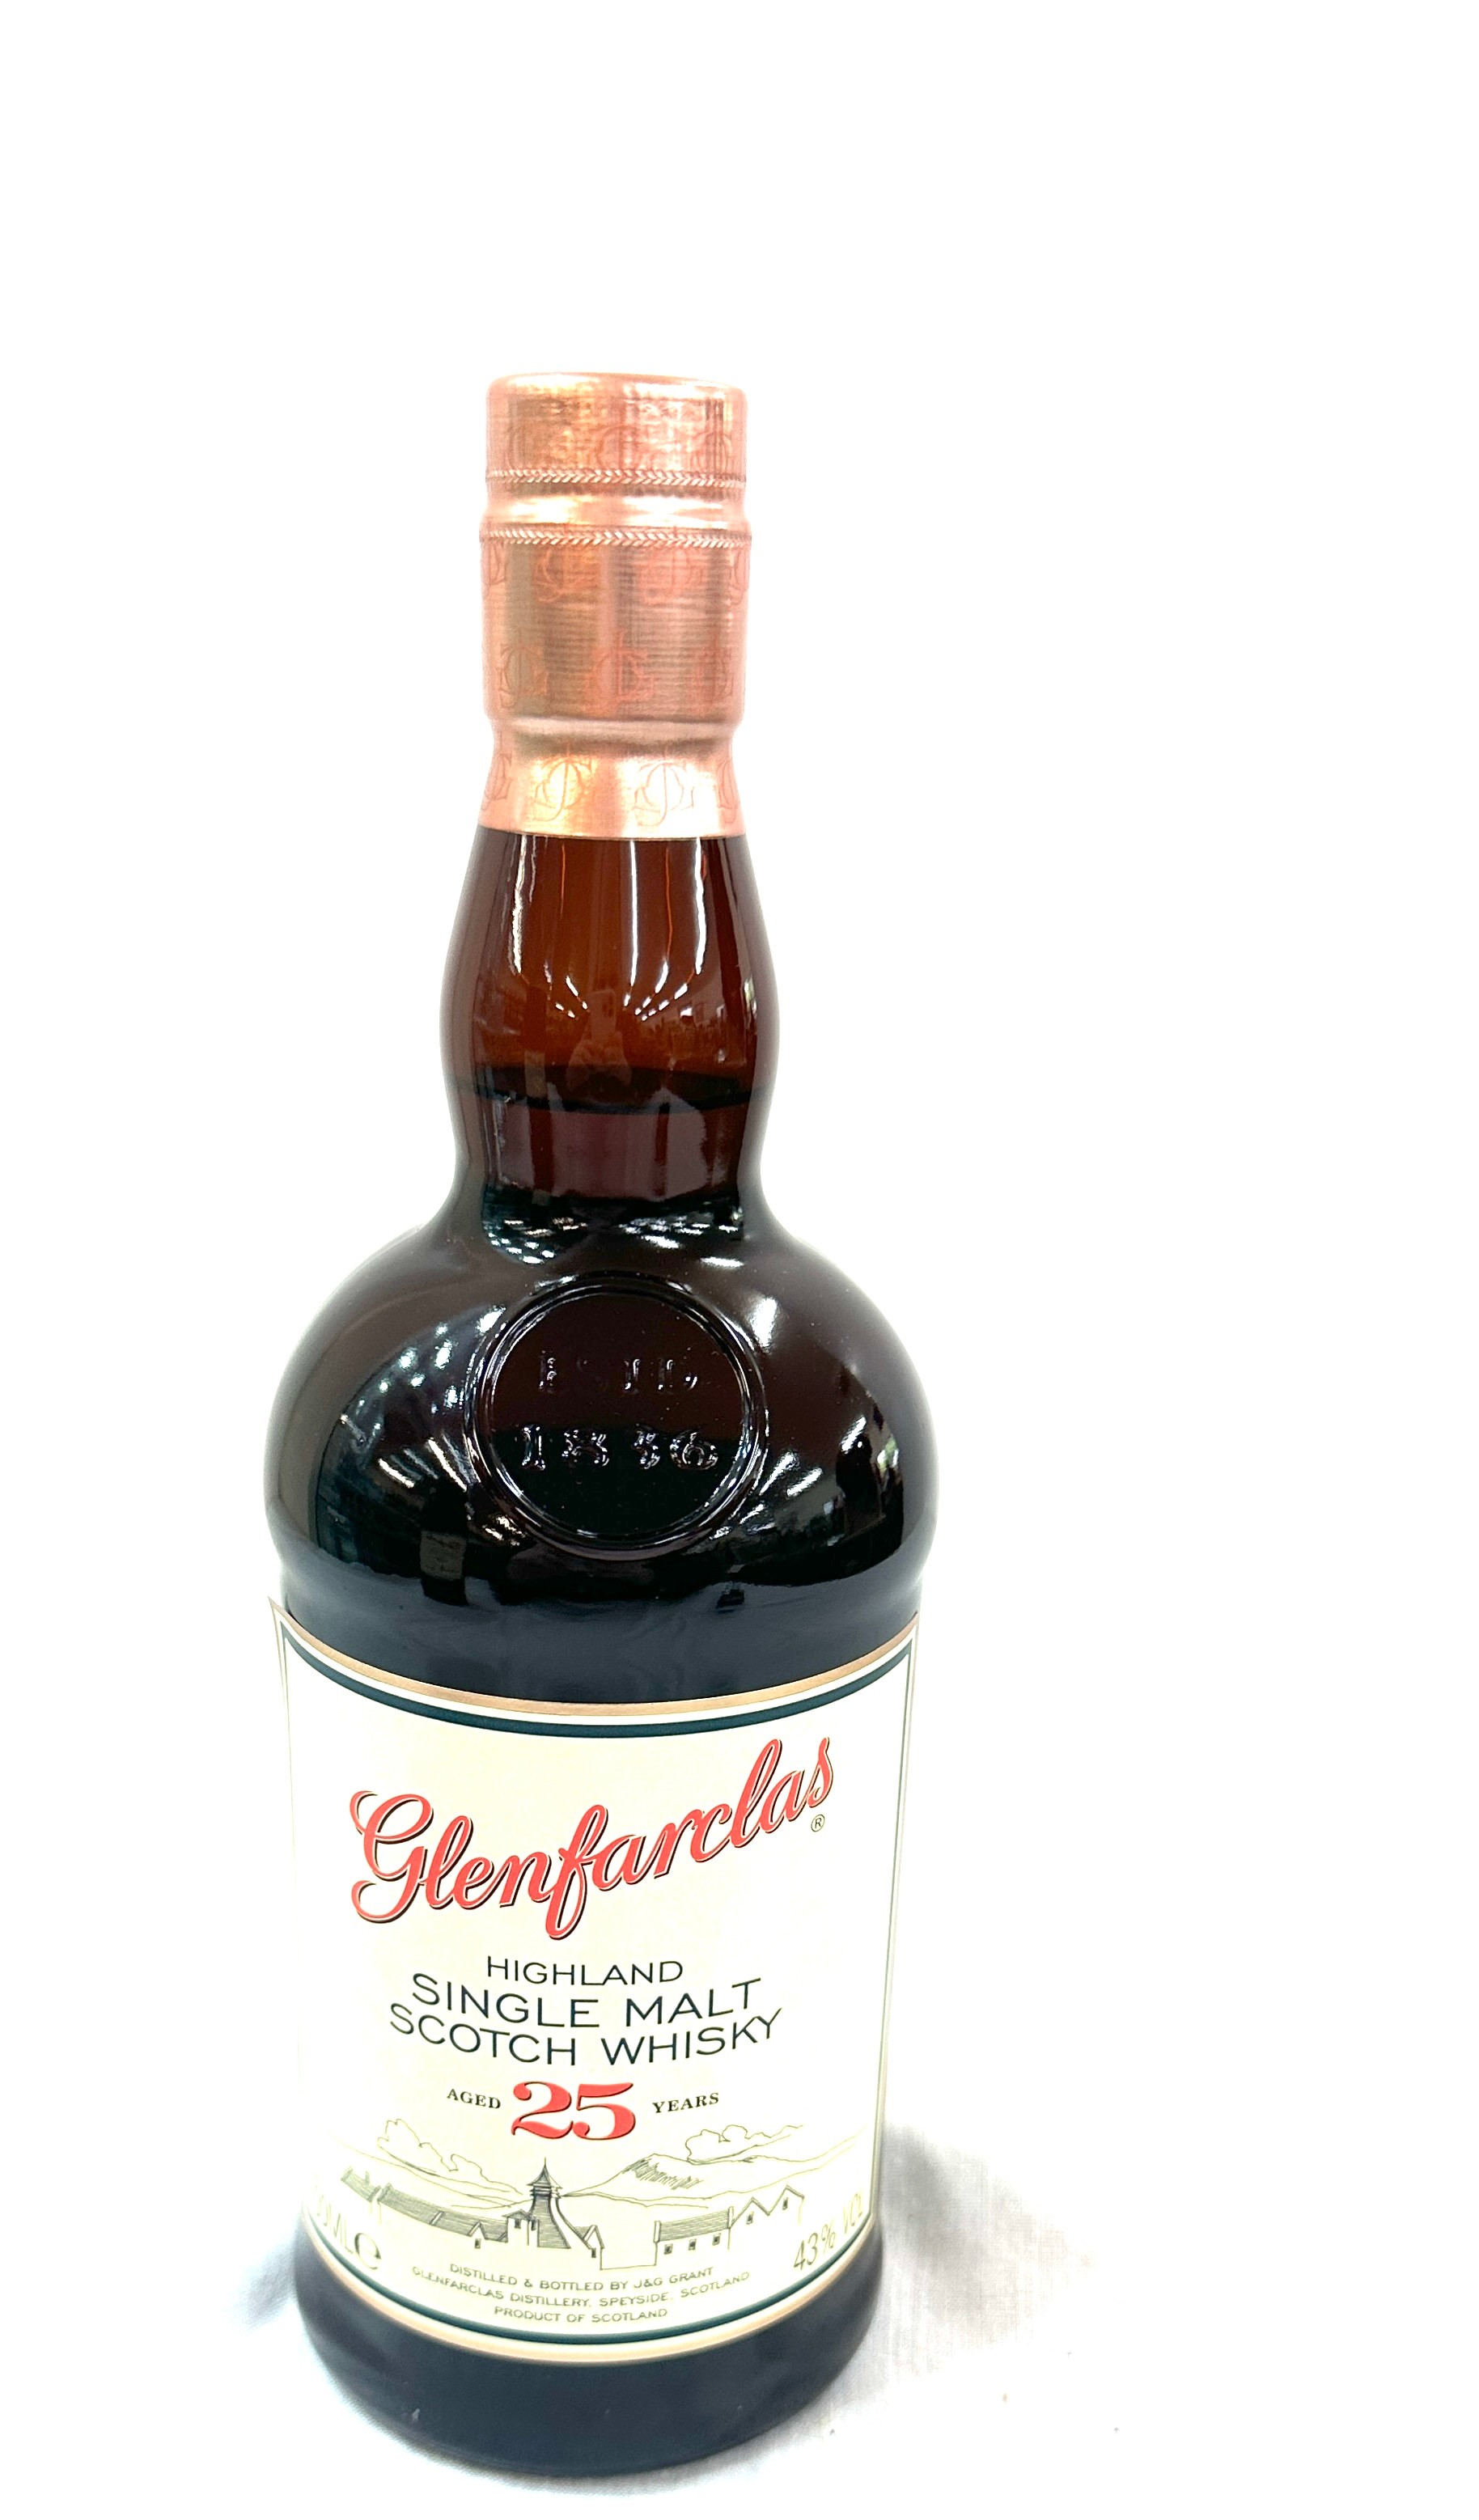 Glenfarclas single malt scotch whisky aged 25 year, 43% 700ml